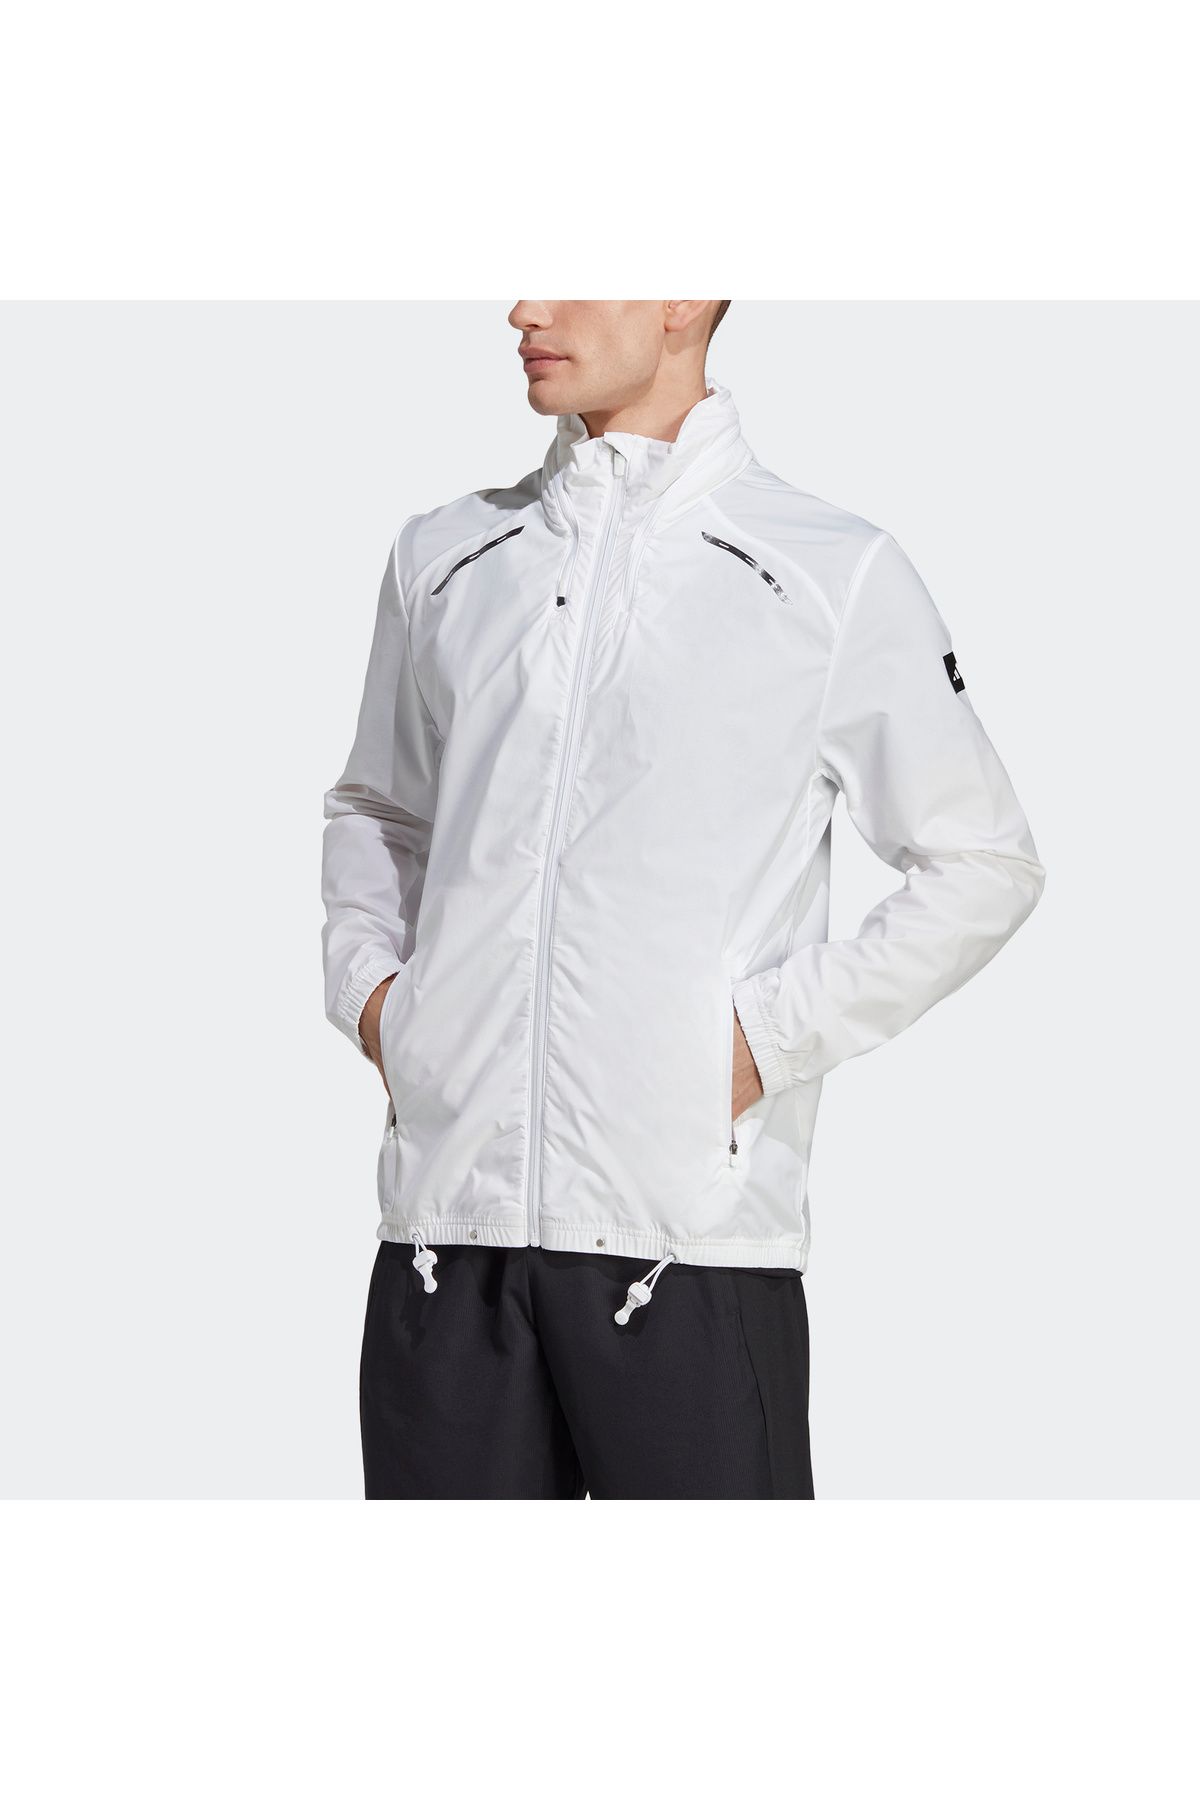 adidas Boa Jacket Whıte Ceket  HY5450